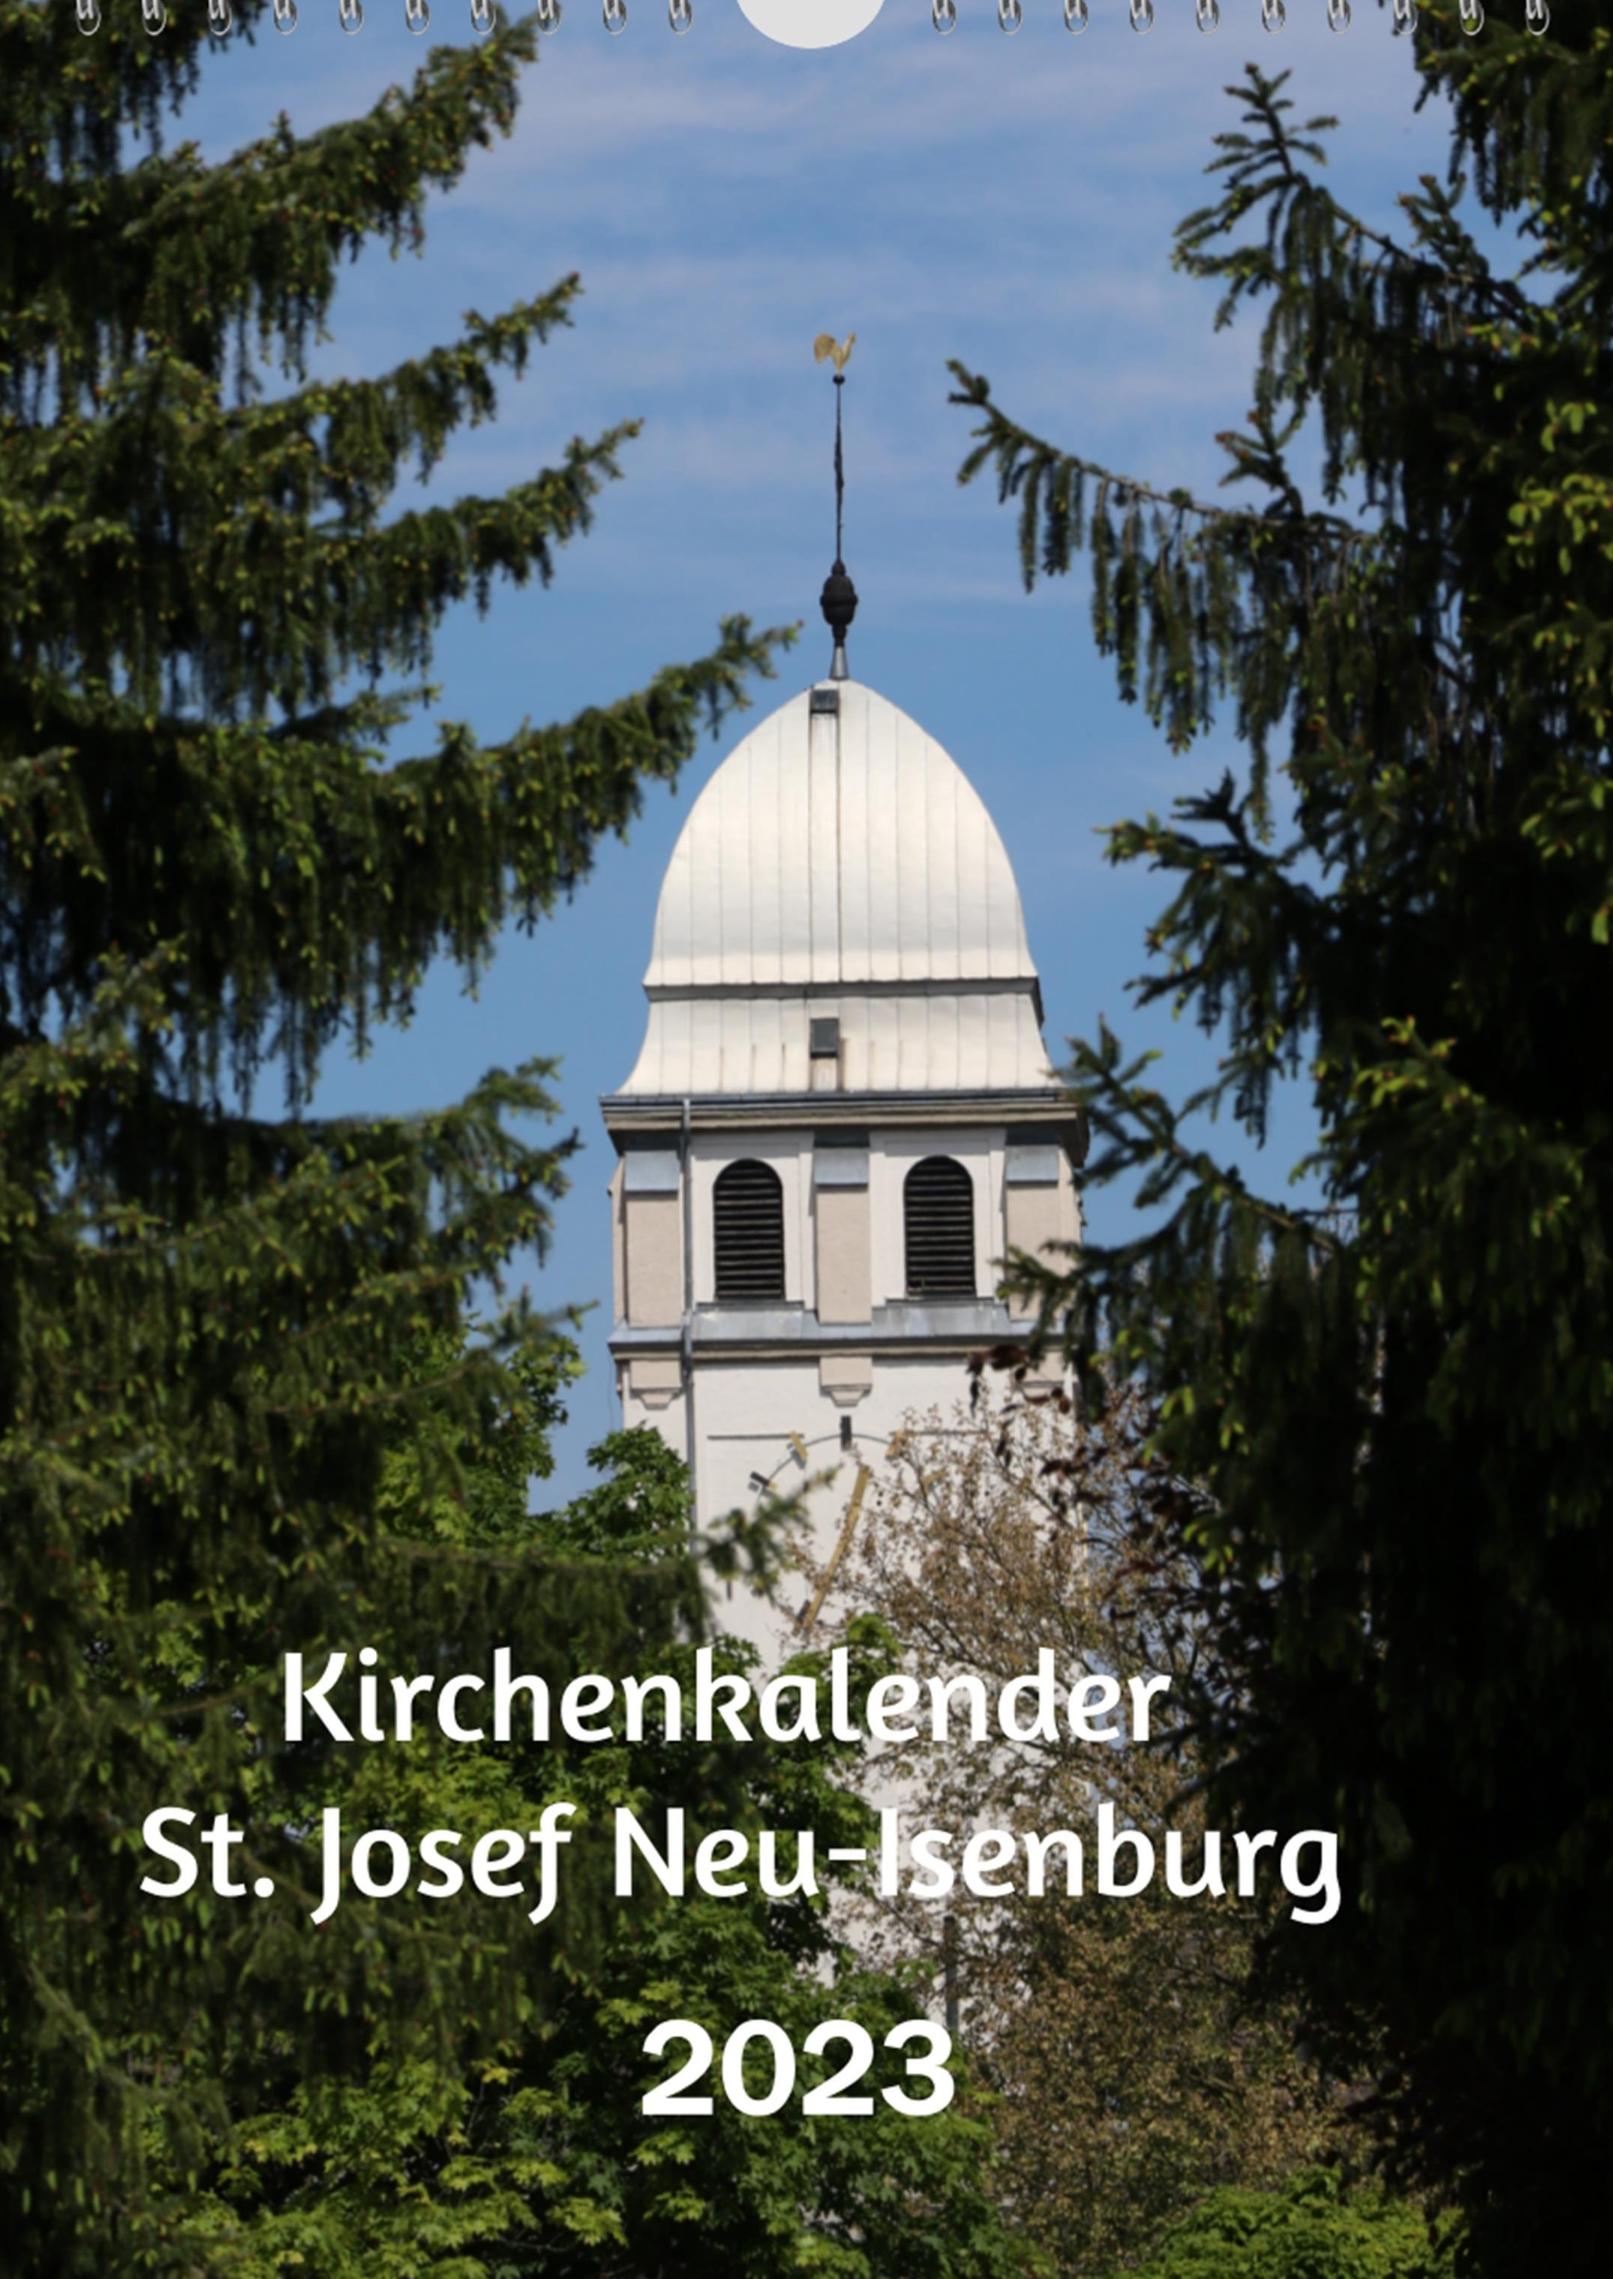 Kirchenkalender St. Josef 2023 (c) D. Thiel